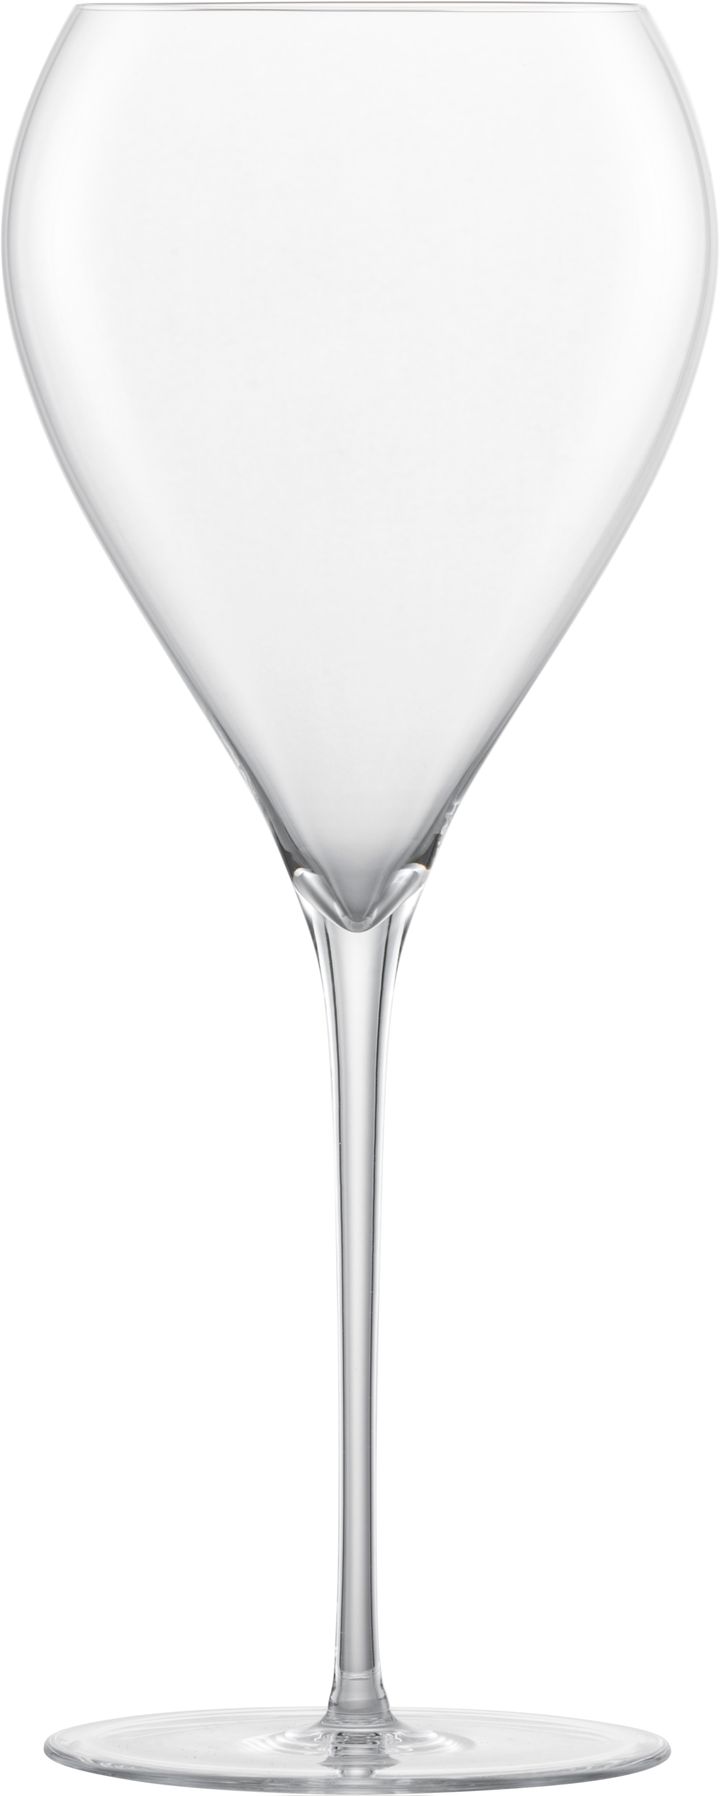 Enoteca champagneglas, 67 cl Zwiesel